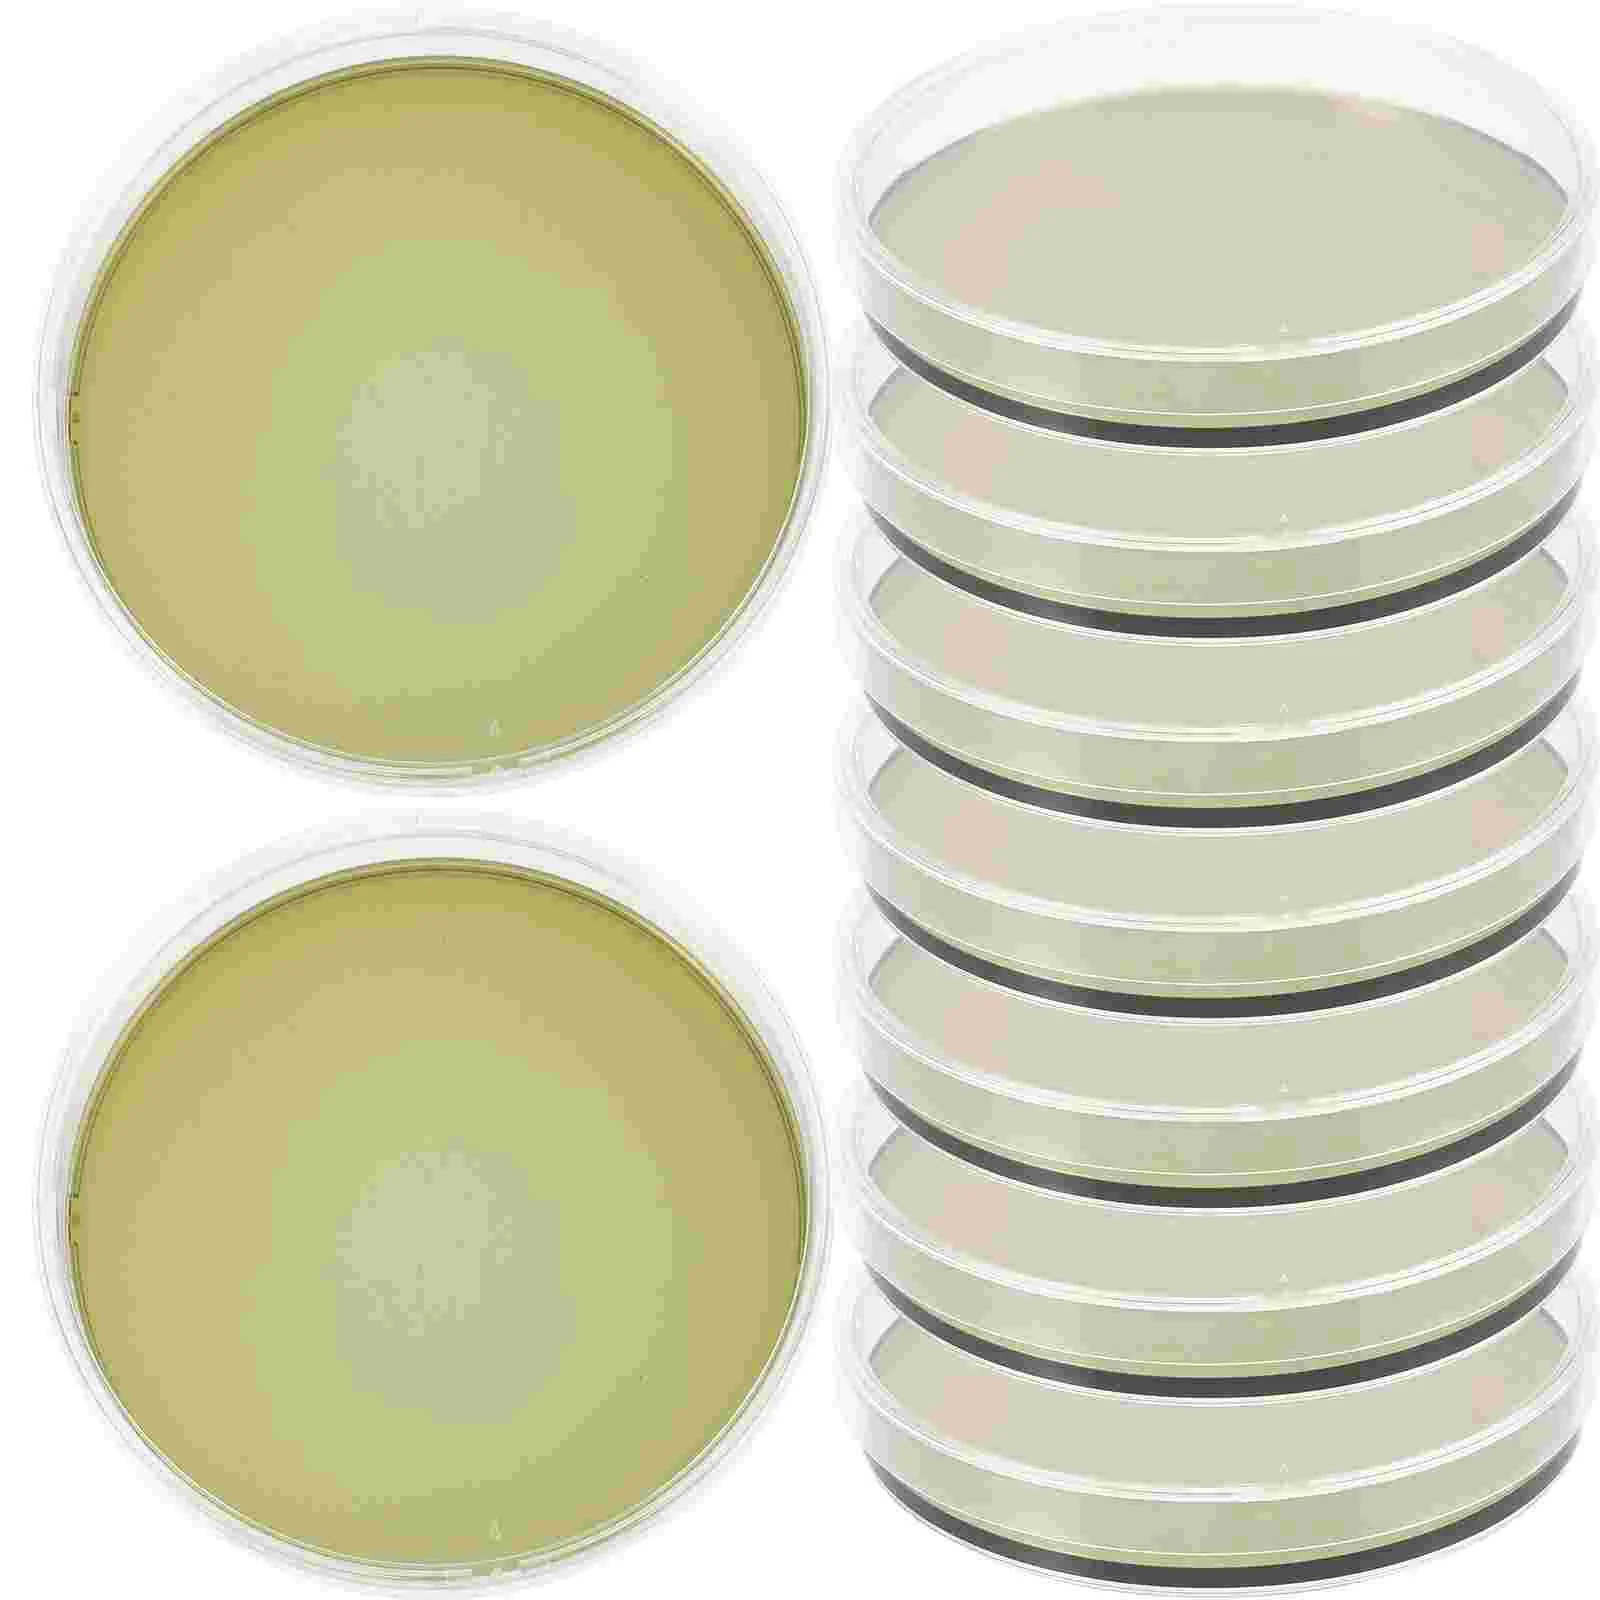 

10 Pcs Agar Test Kit Prepoured Petri Dish Plate Portable Plates Plastic Dishes Science Experiment Supplies